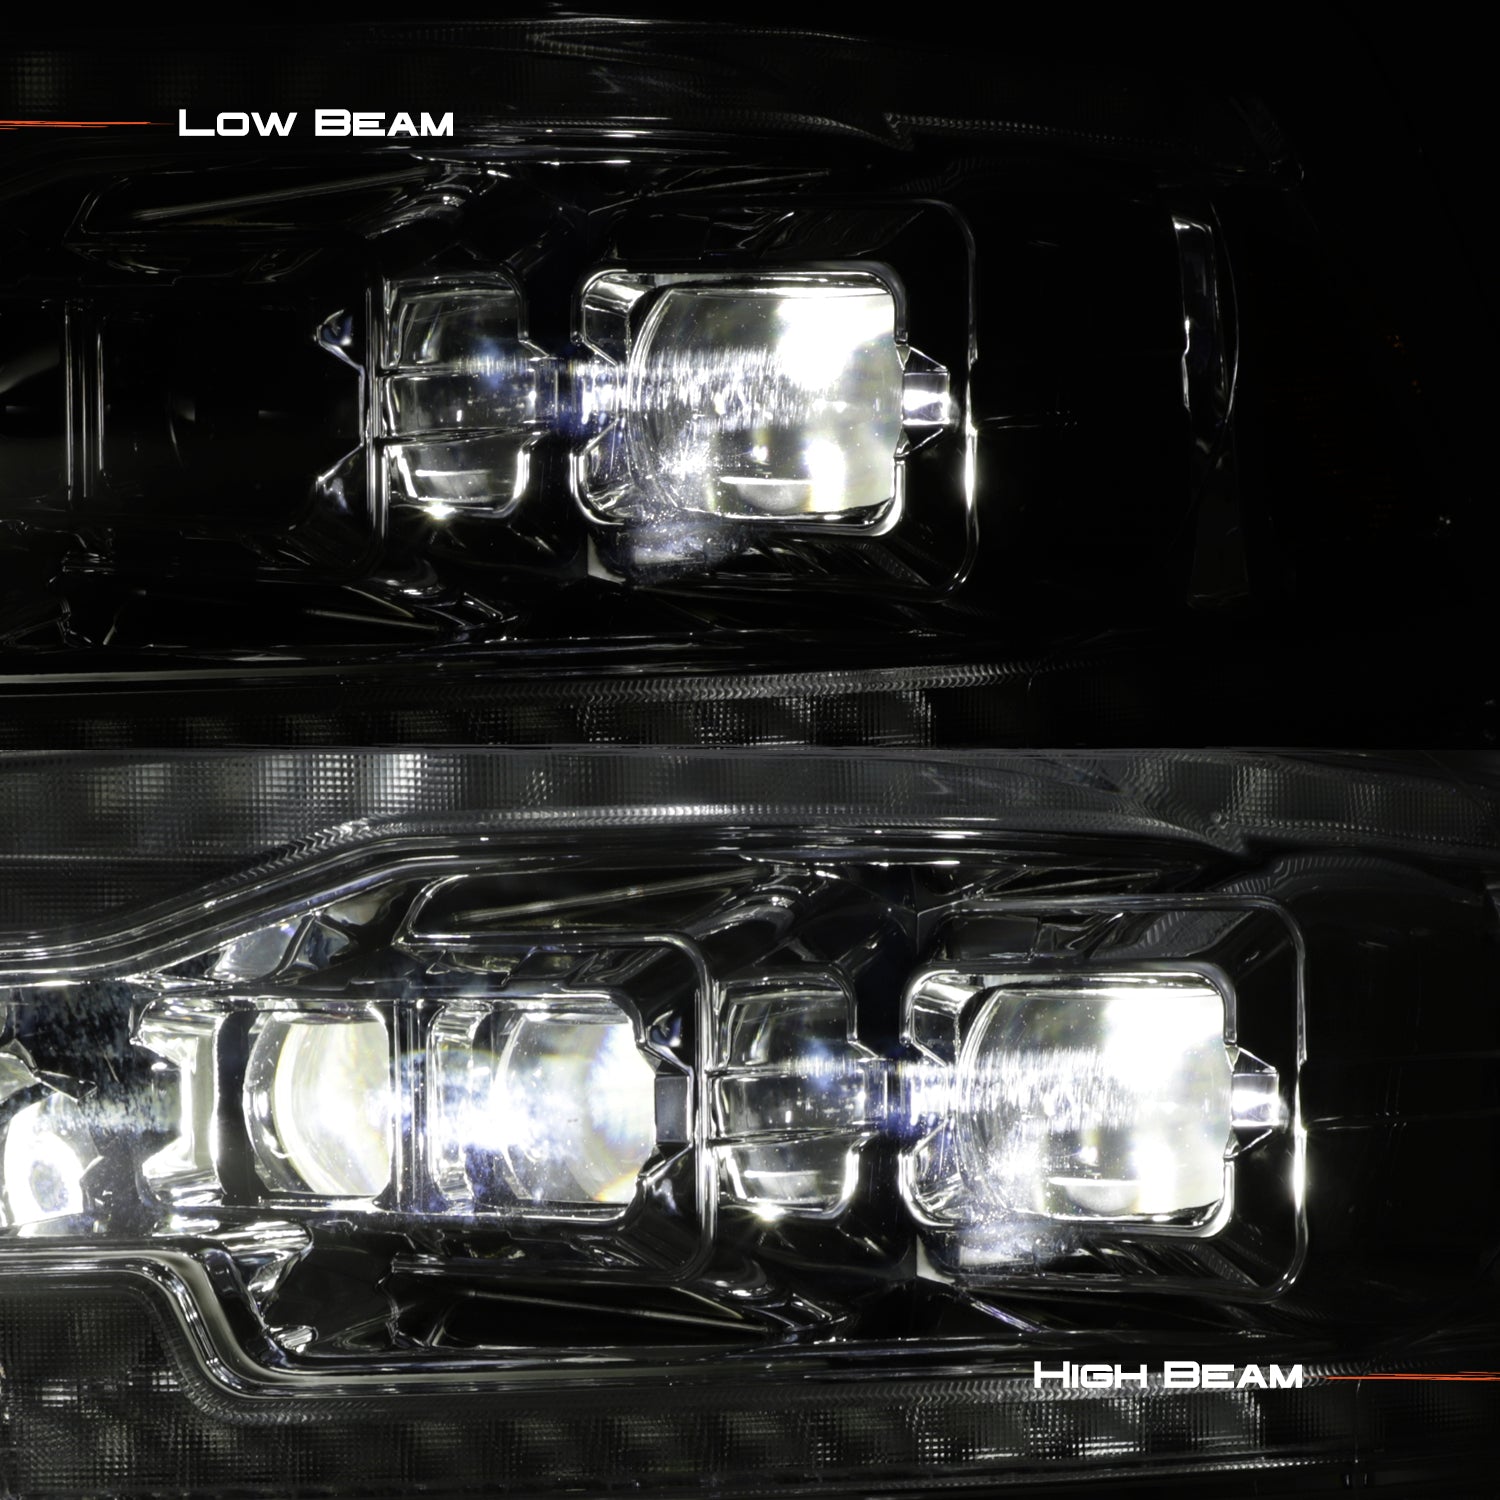 AKKON - [FULL LED High/Low] For 09-18 Dodge Ram 1500 2500 3500 Triple